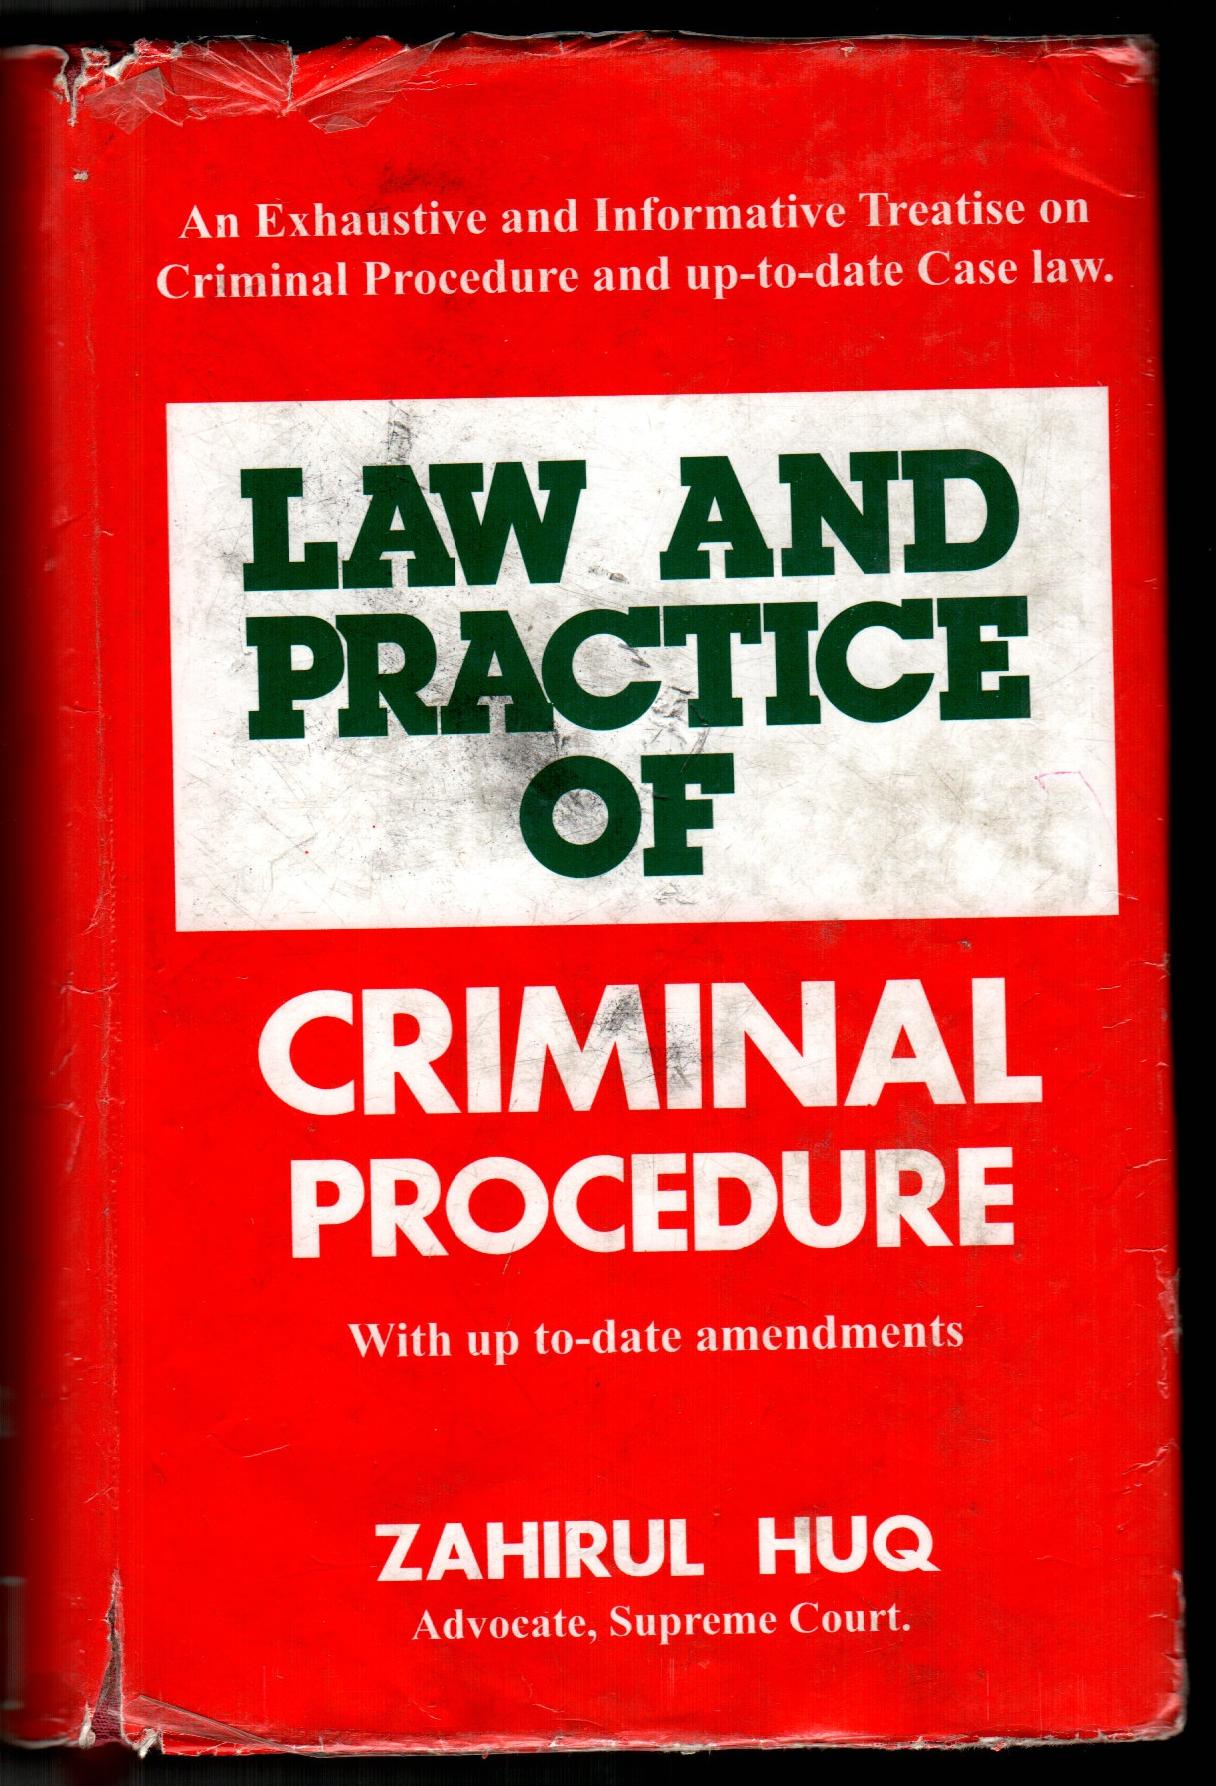 Law and practice of criminal procedure